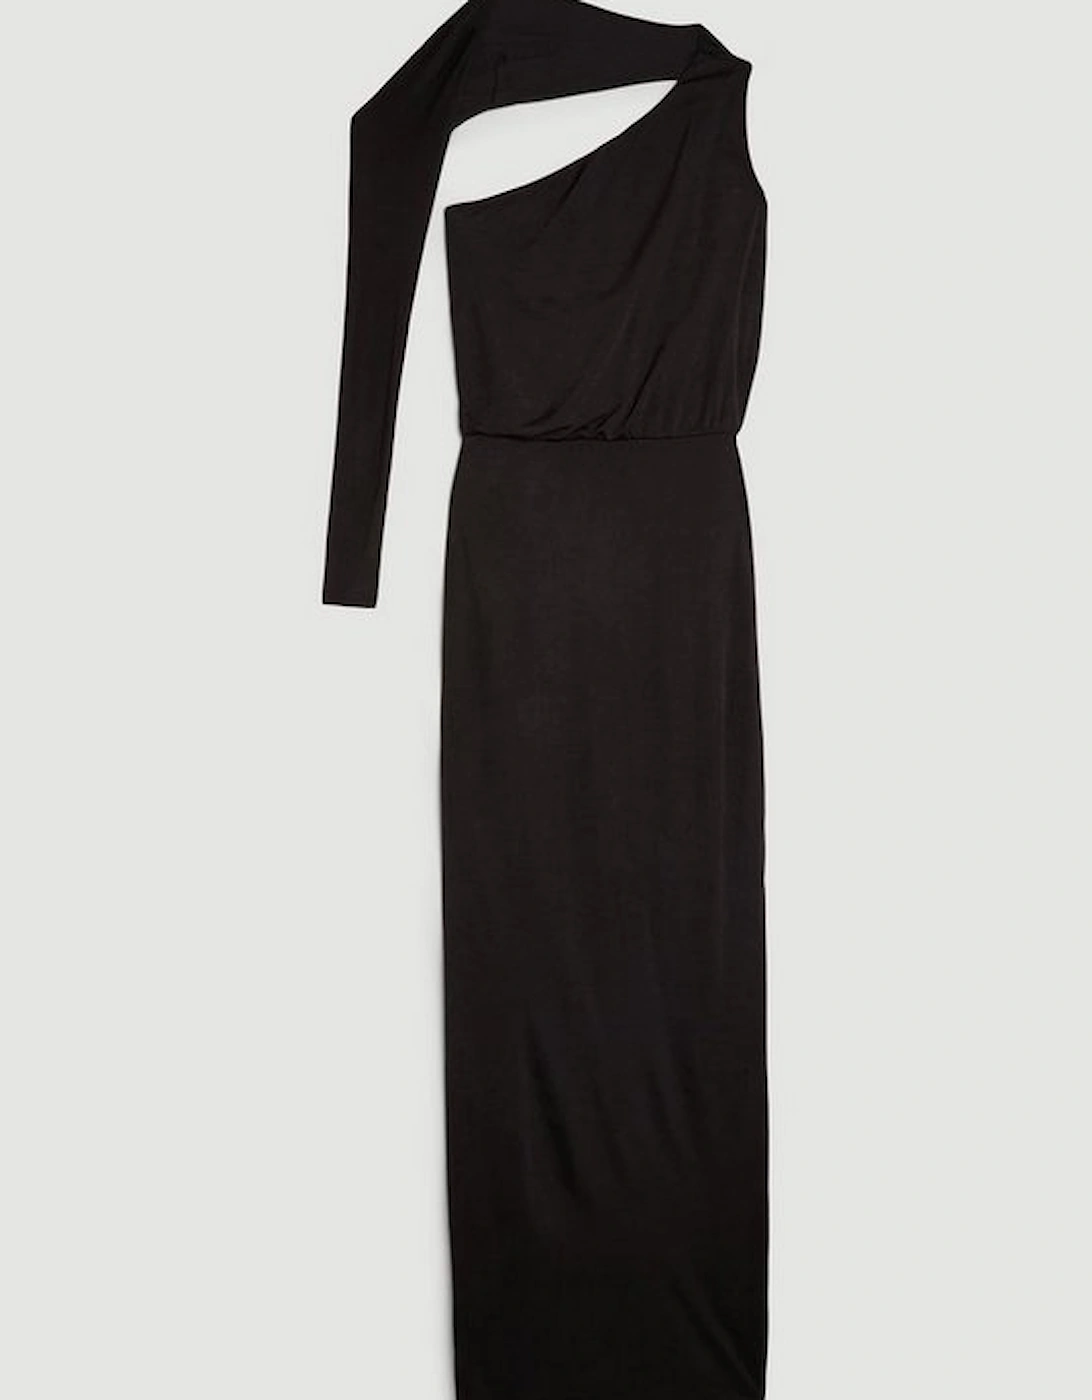 The Founder Premium Jersey Asymmetric Detail Dress